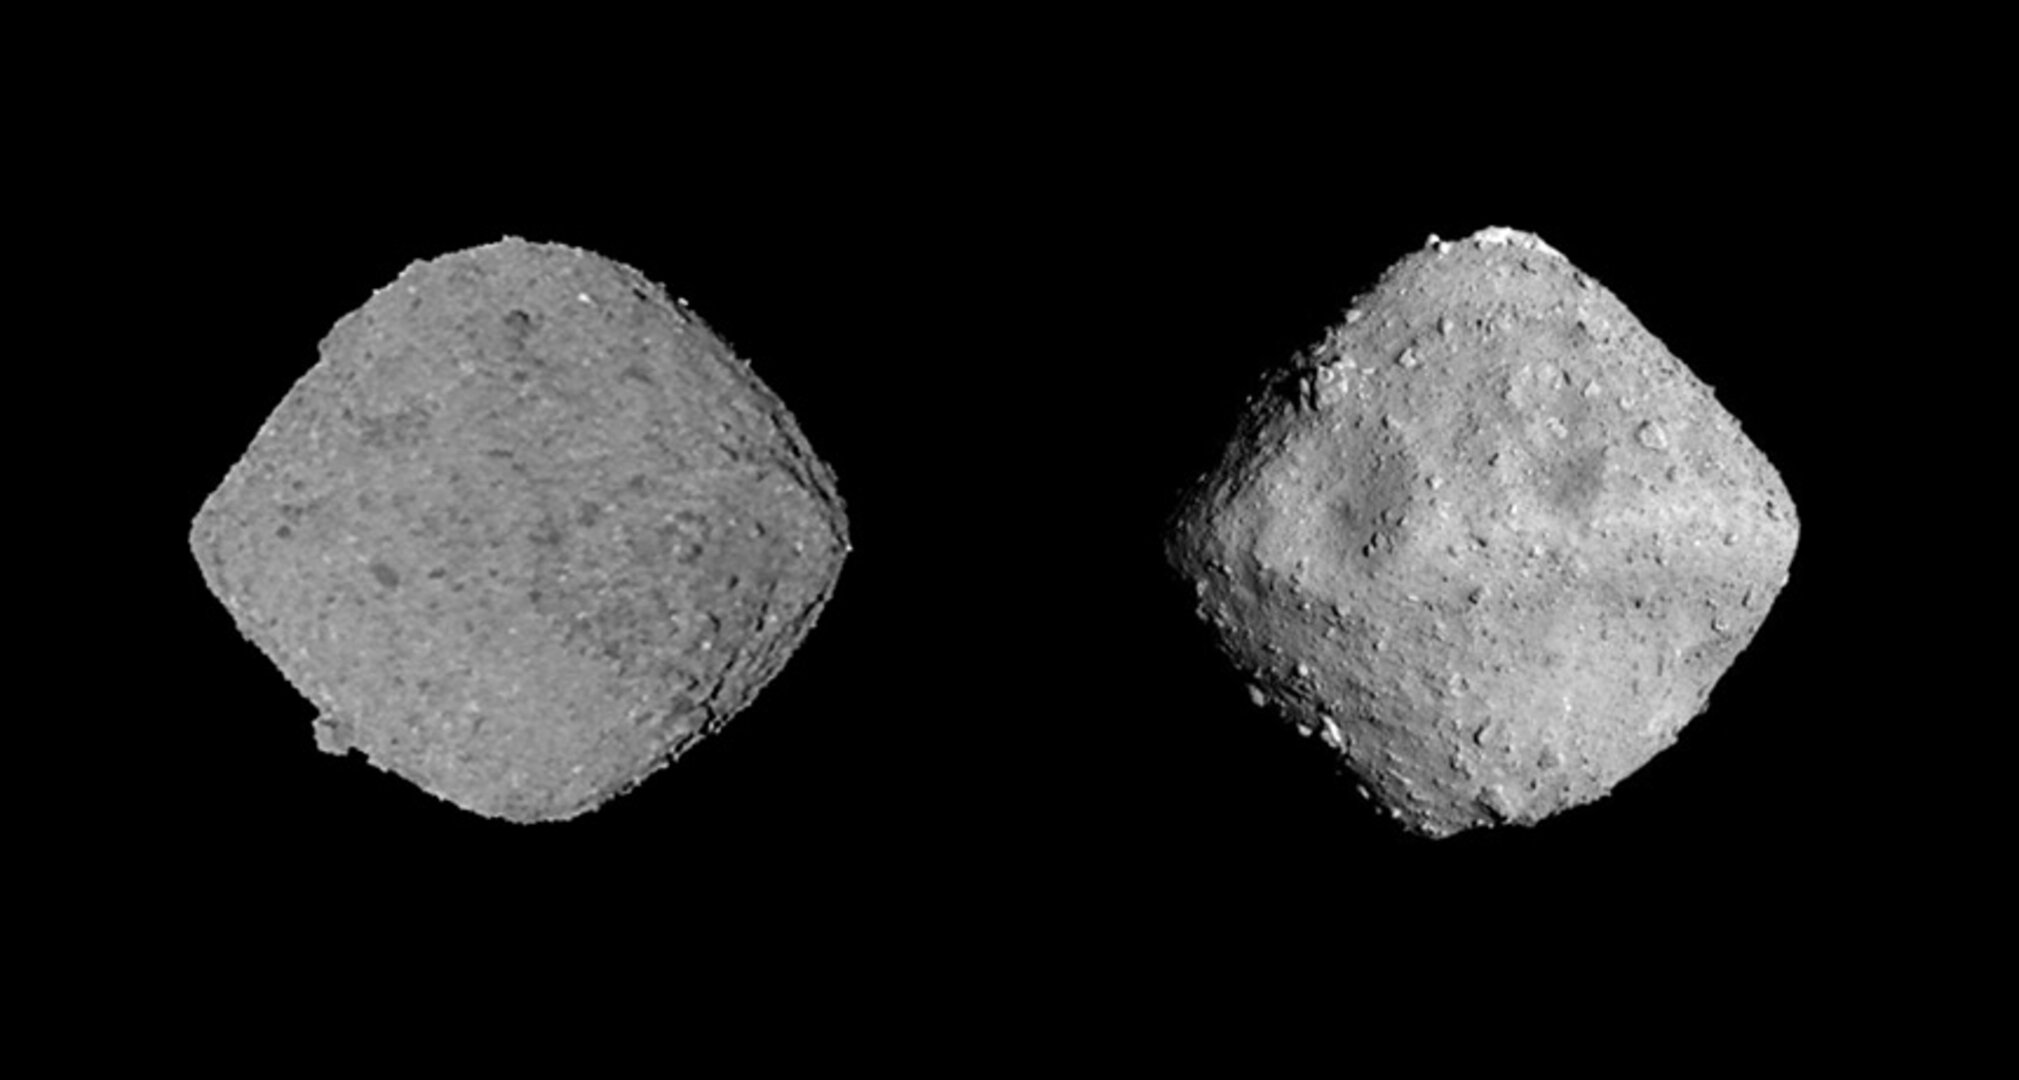 Images of asteroid Bennu. Credit: ESA